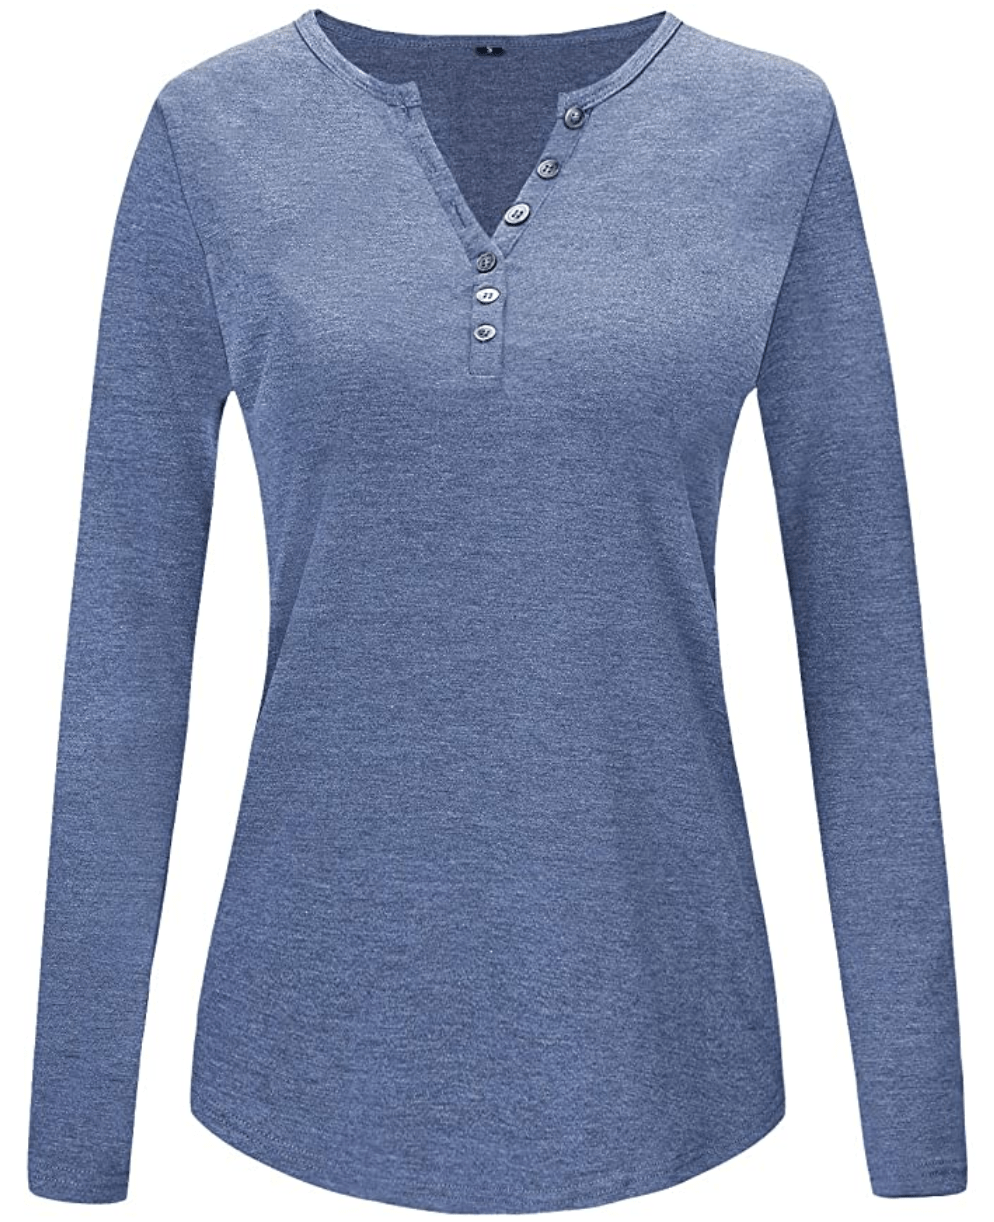 OUGES Women's Long Sleeve V-Neck Button Causal Top (Blue)